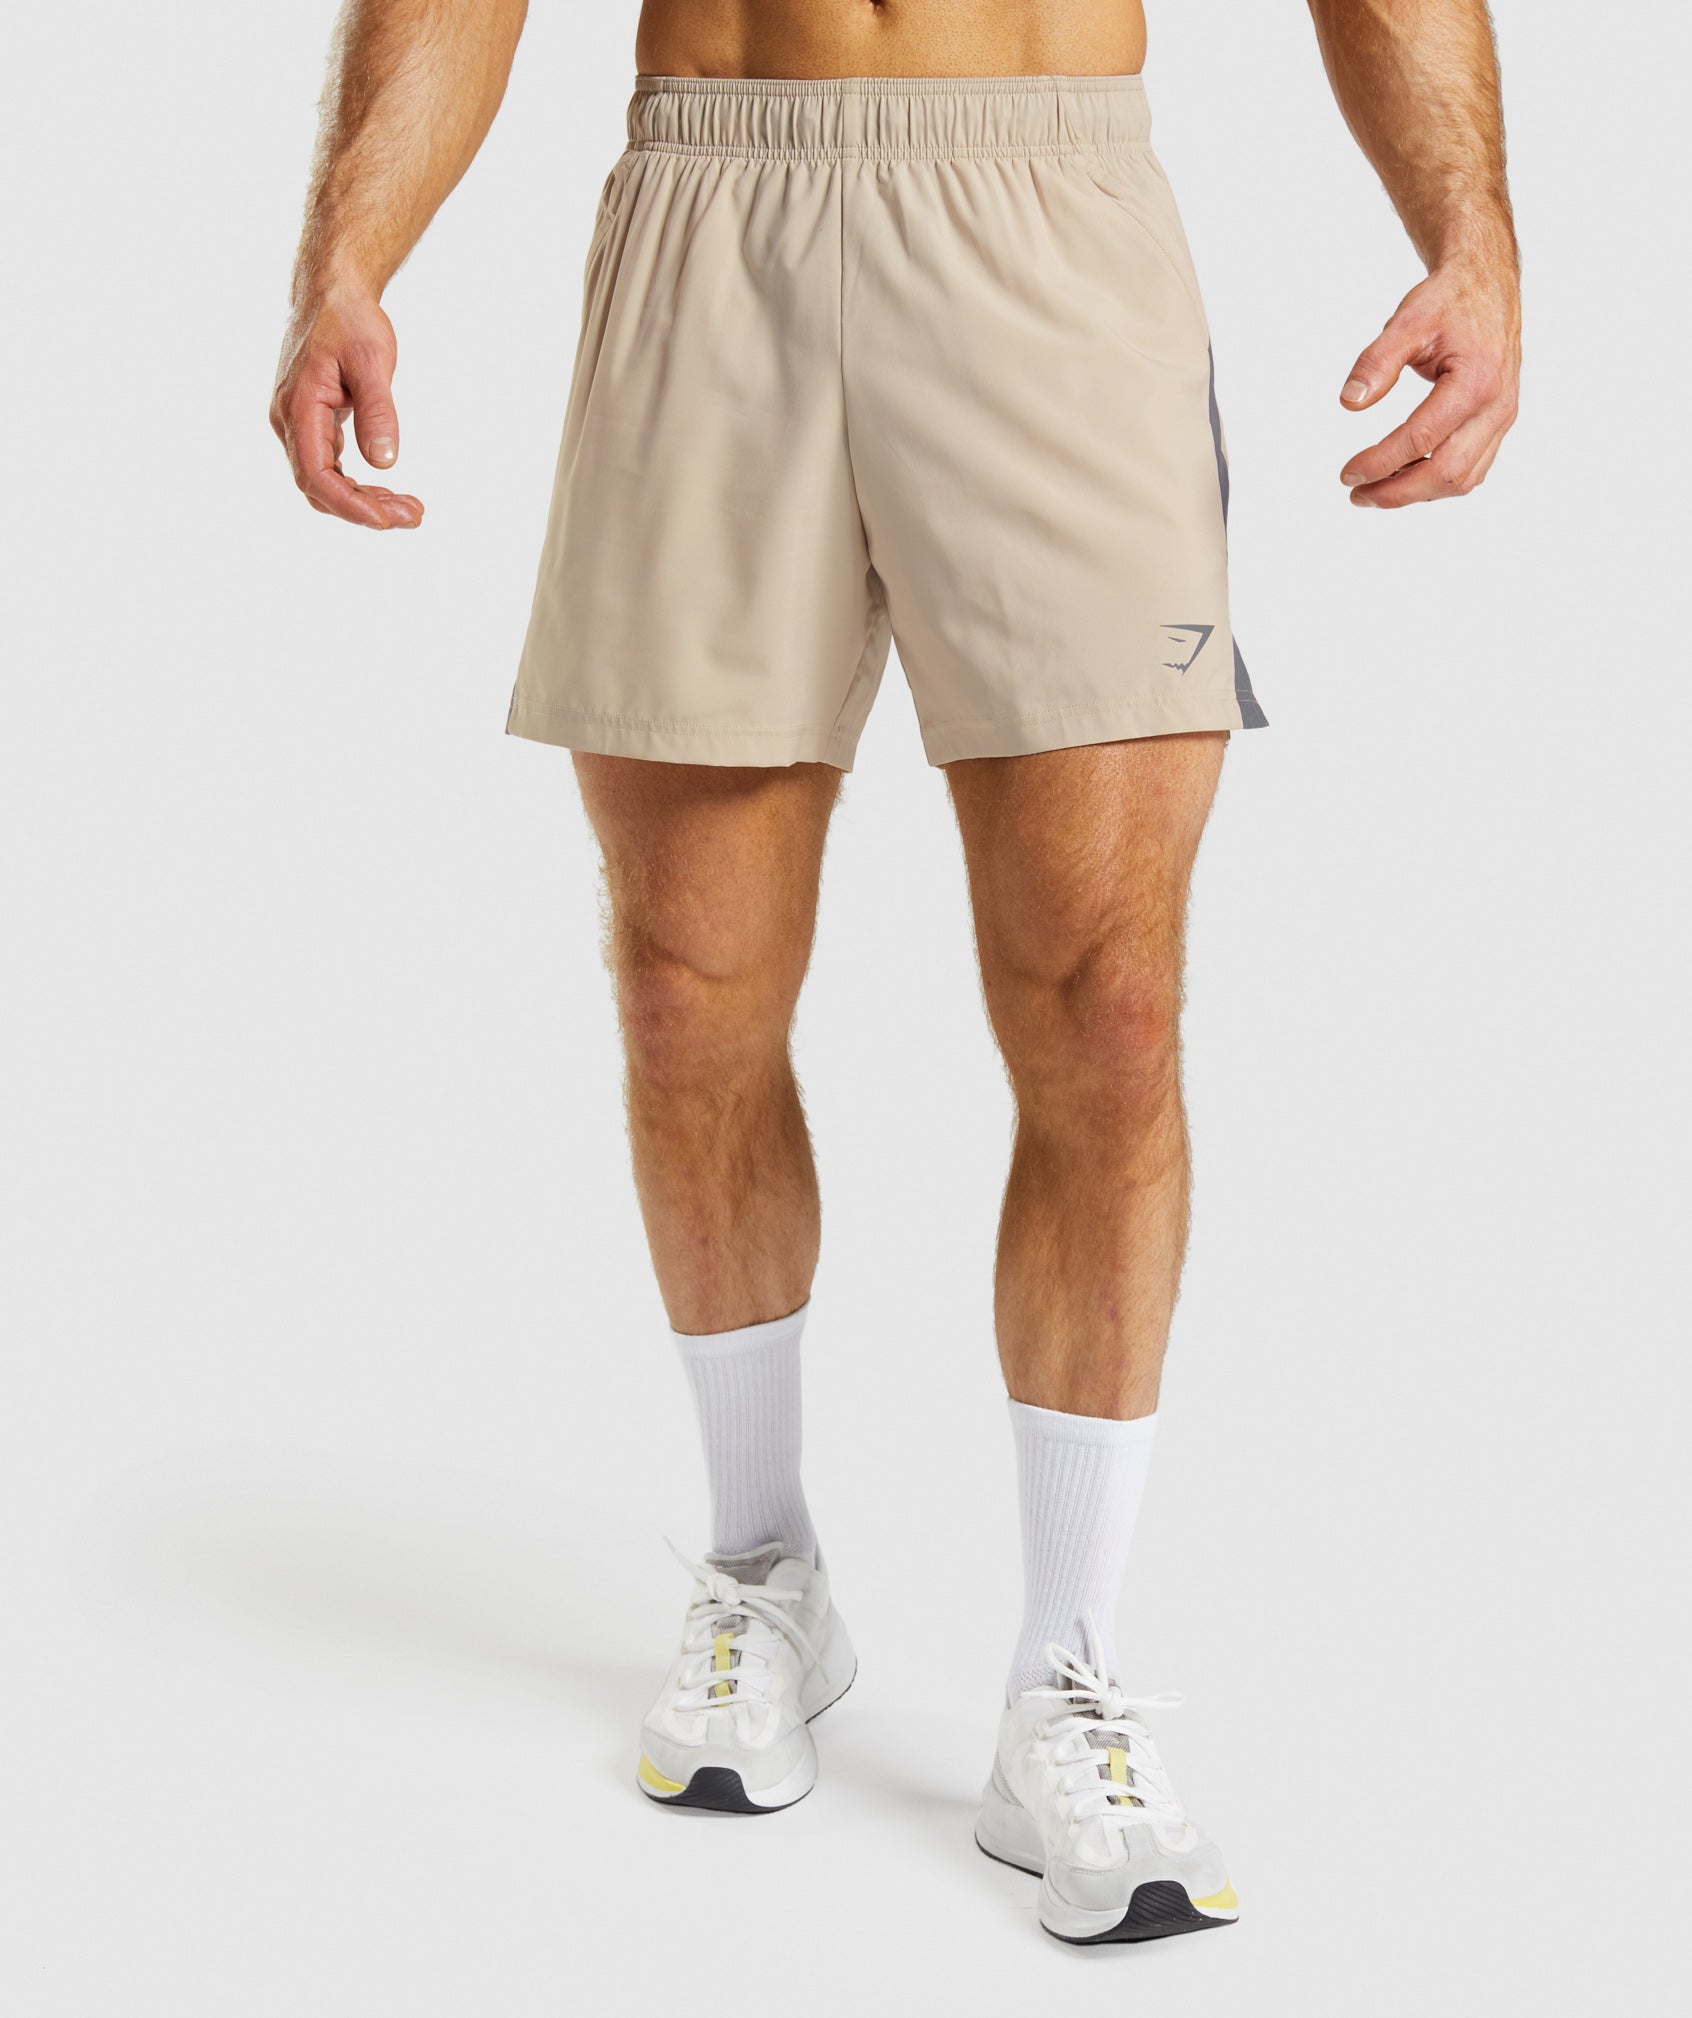 Sport Shorts dans Toasted Brown/Silhouette Greyest en rupture de stock